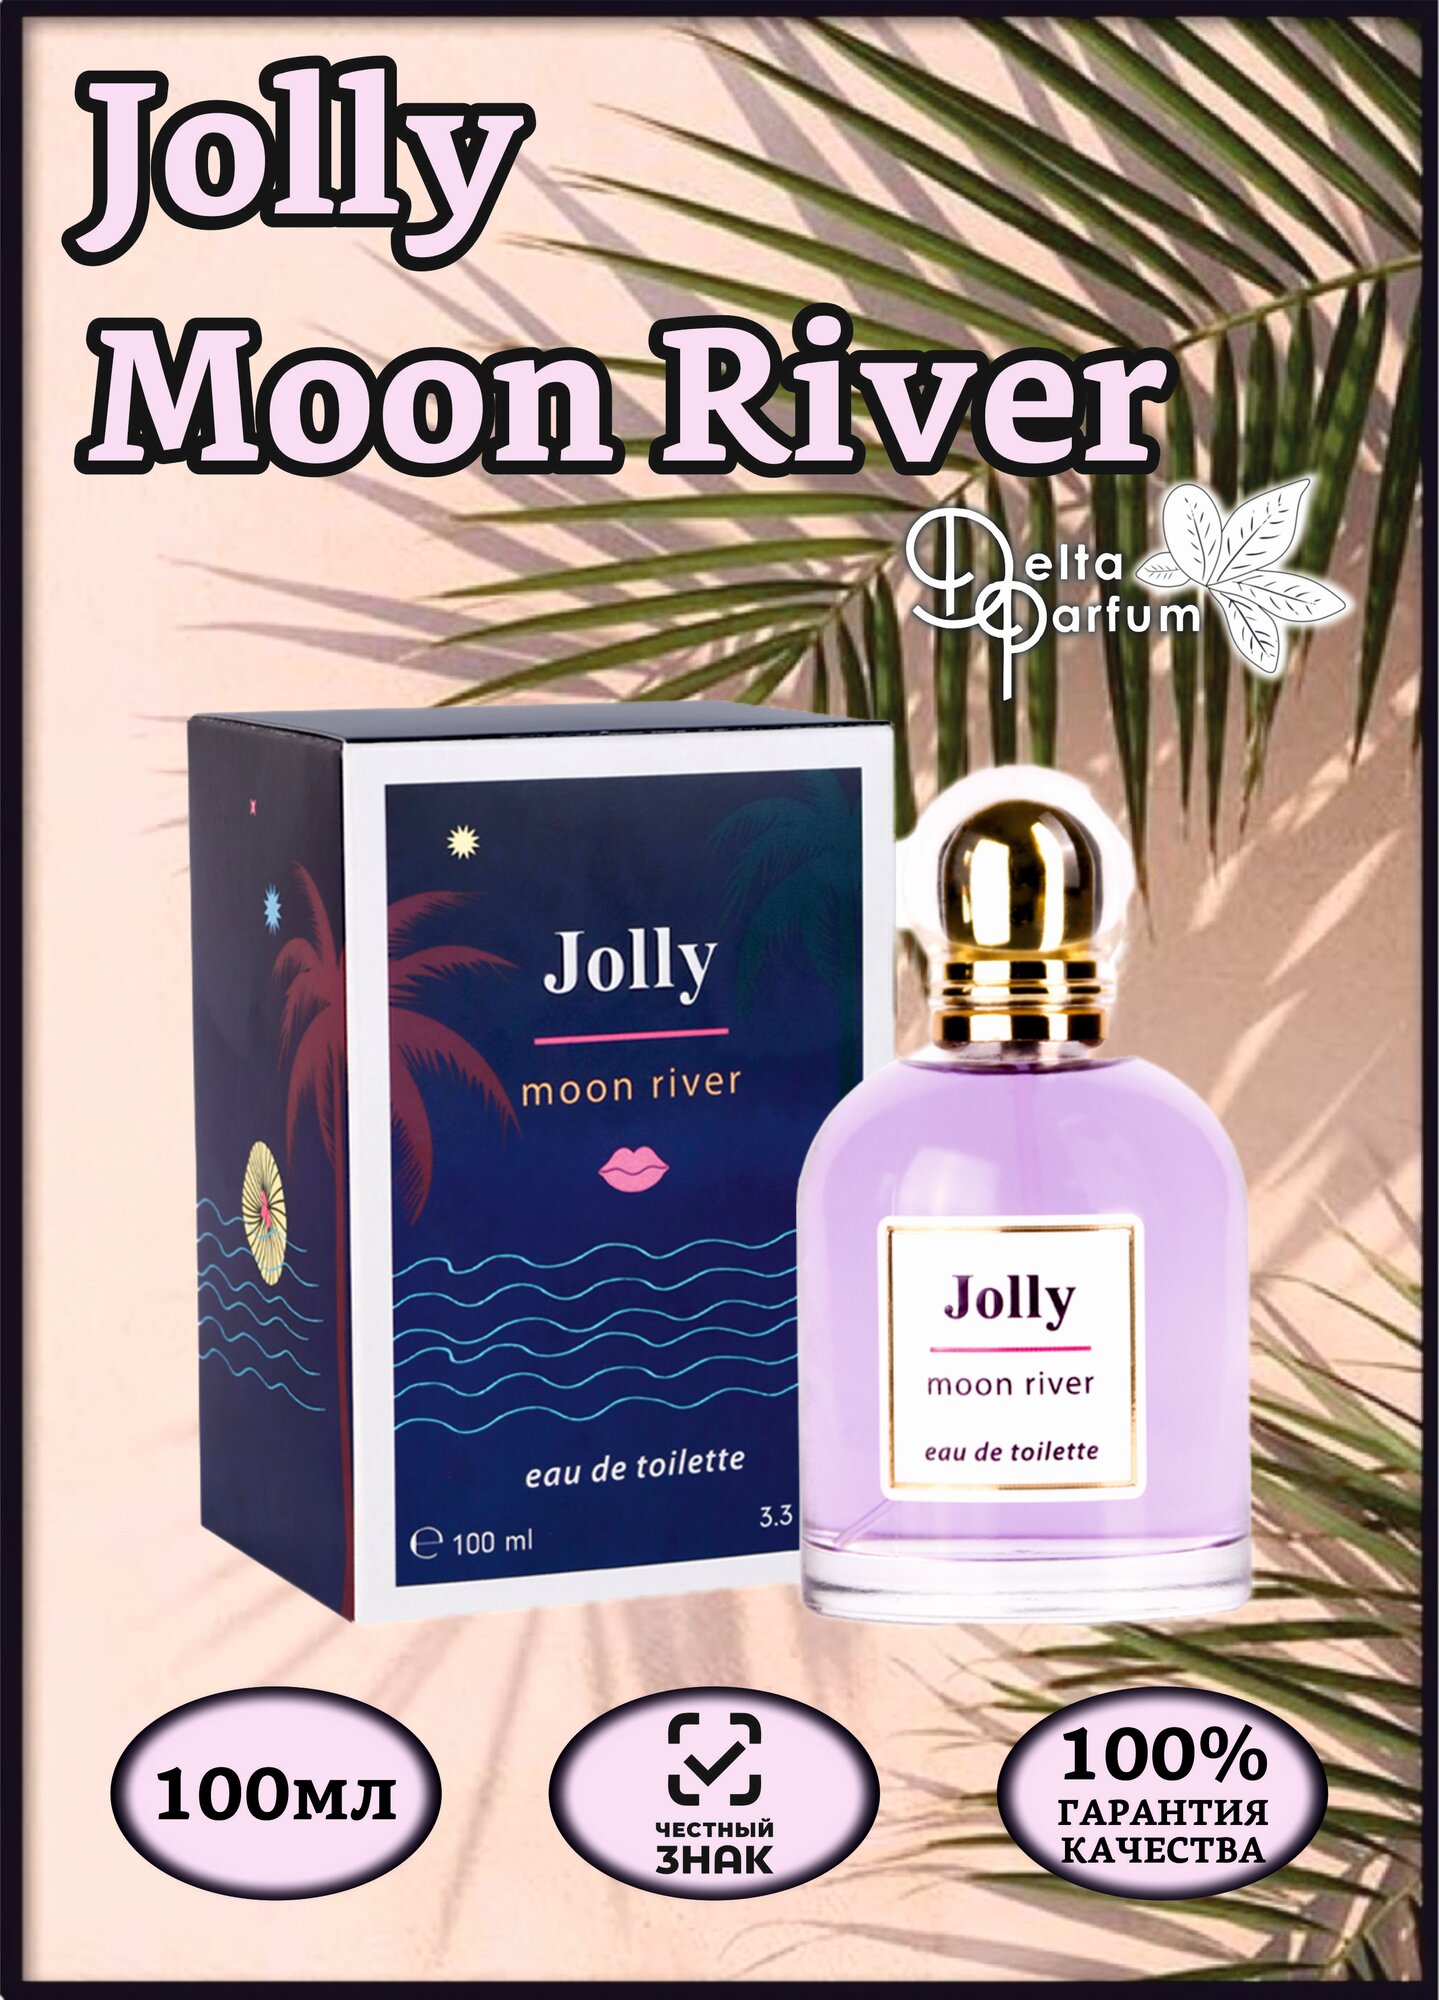 Delta parfum Туалетная вода женская Jolly Moon River, 100 мл